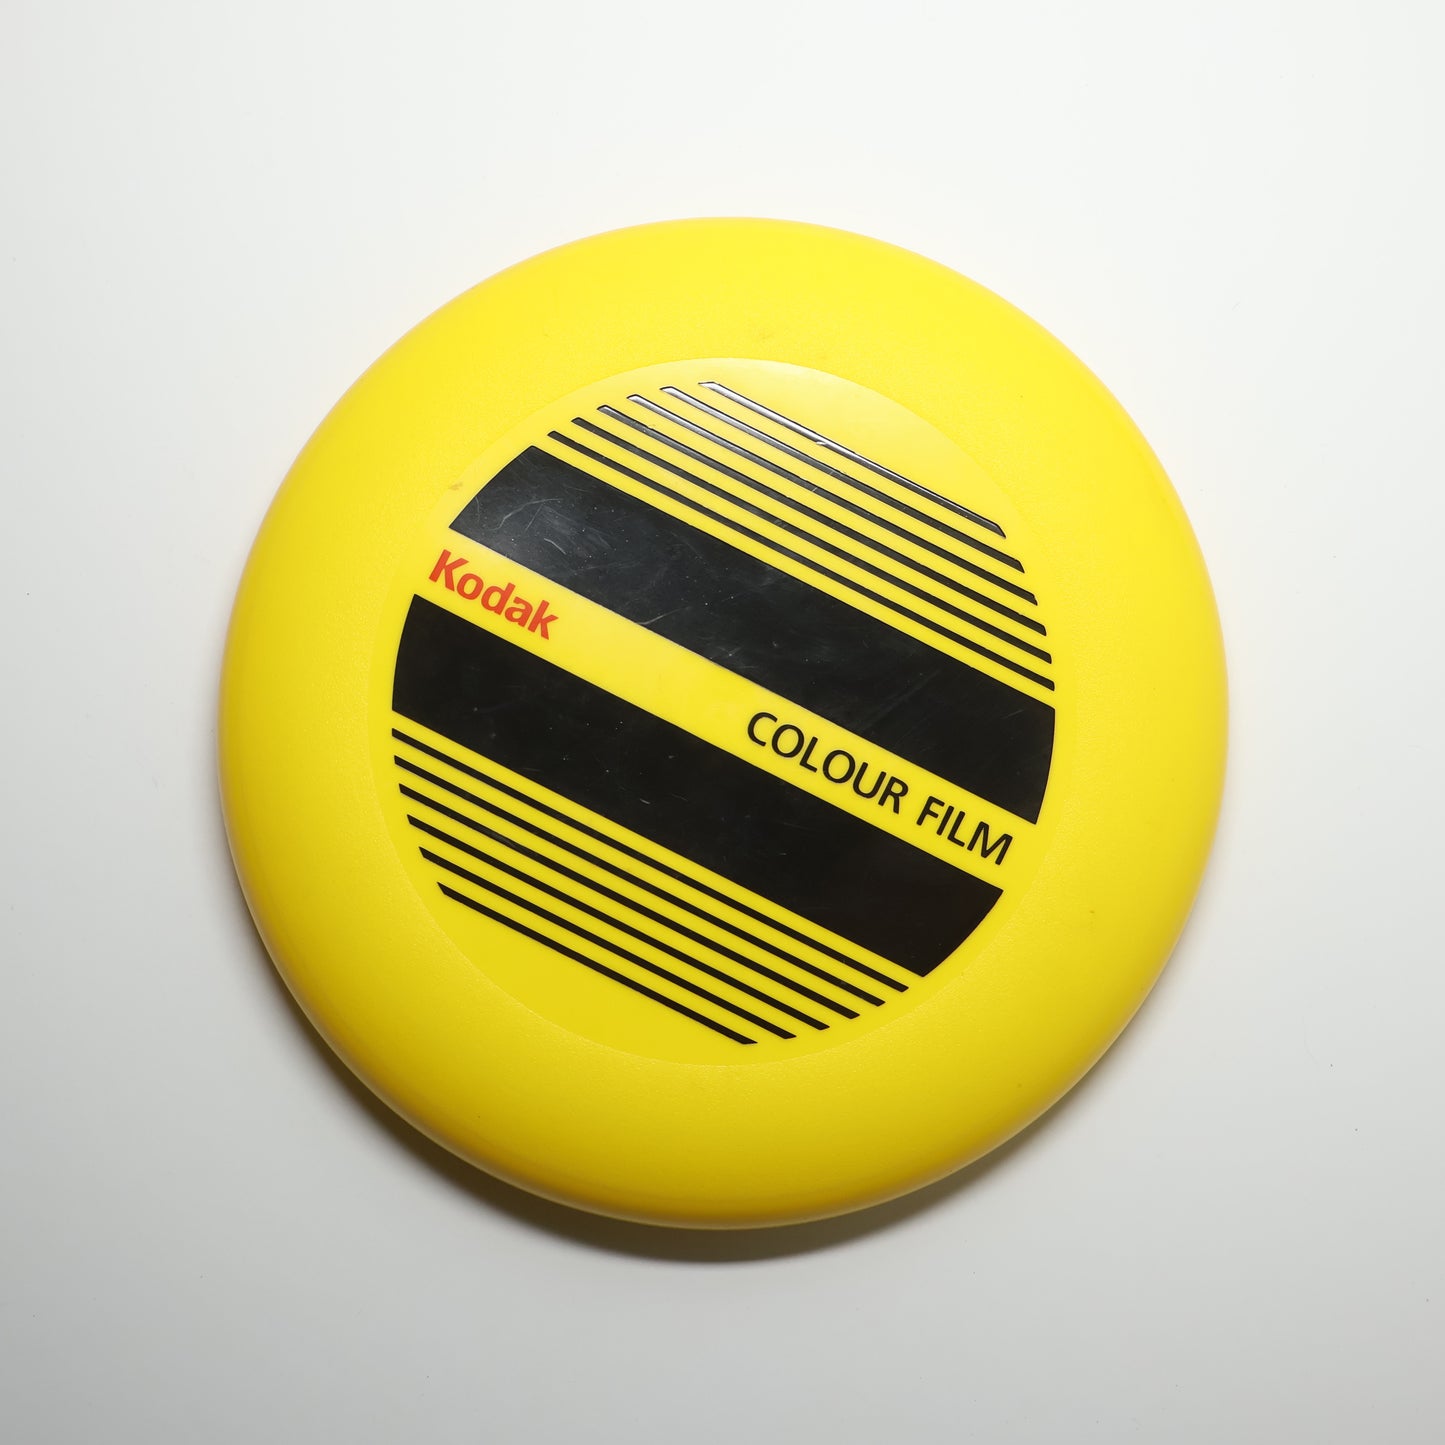 Kodak Frisbee